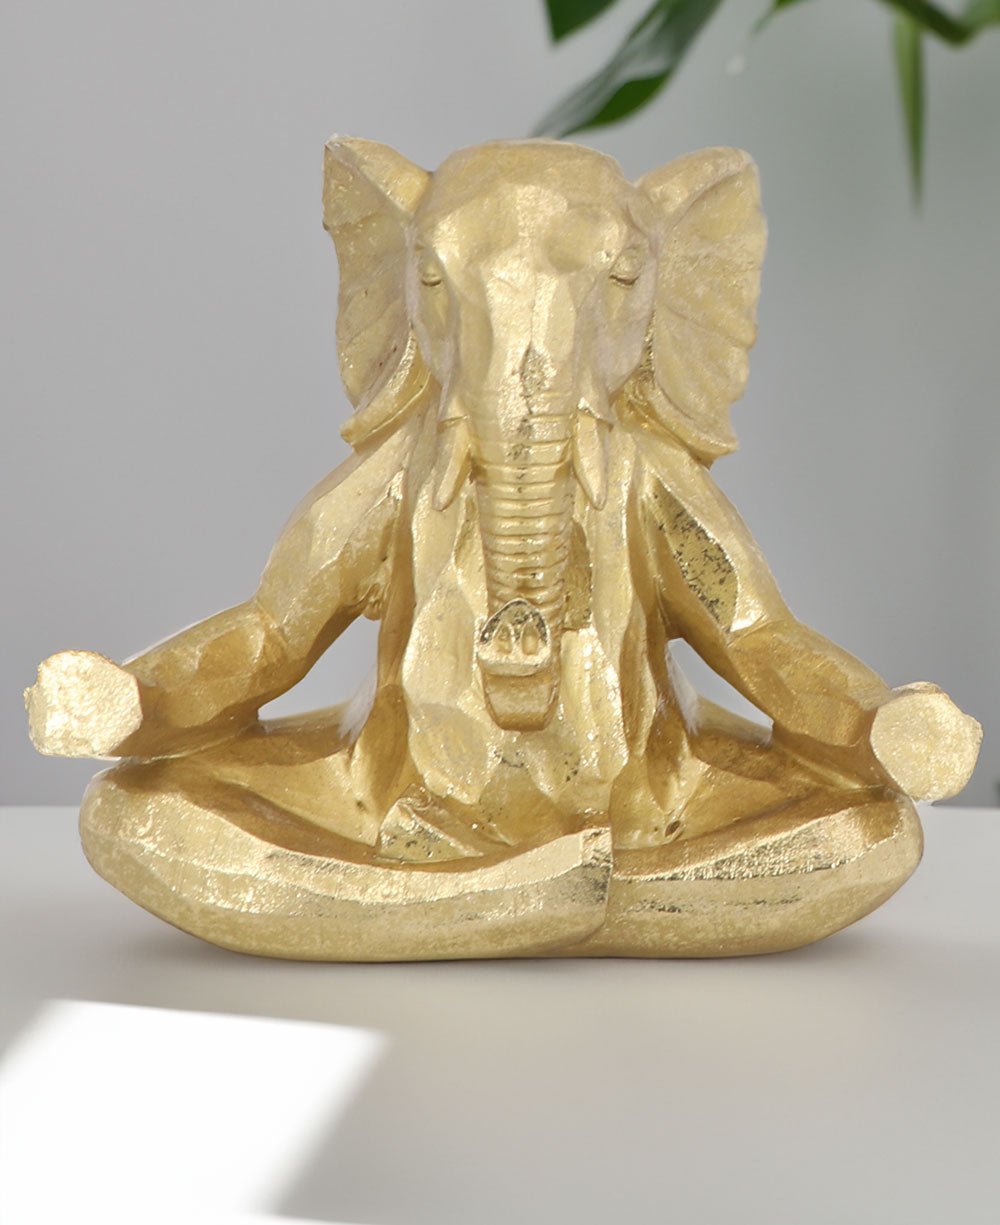 Golden Meditating Yoga Elephant Figurine - Sculptures & Statues